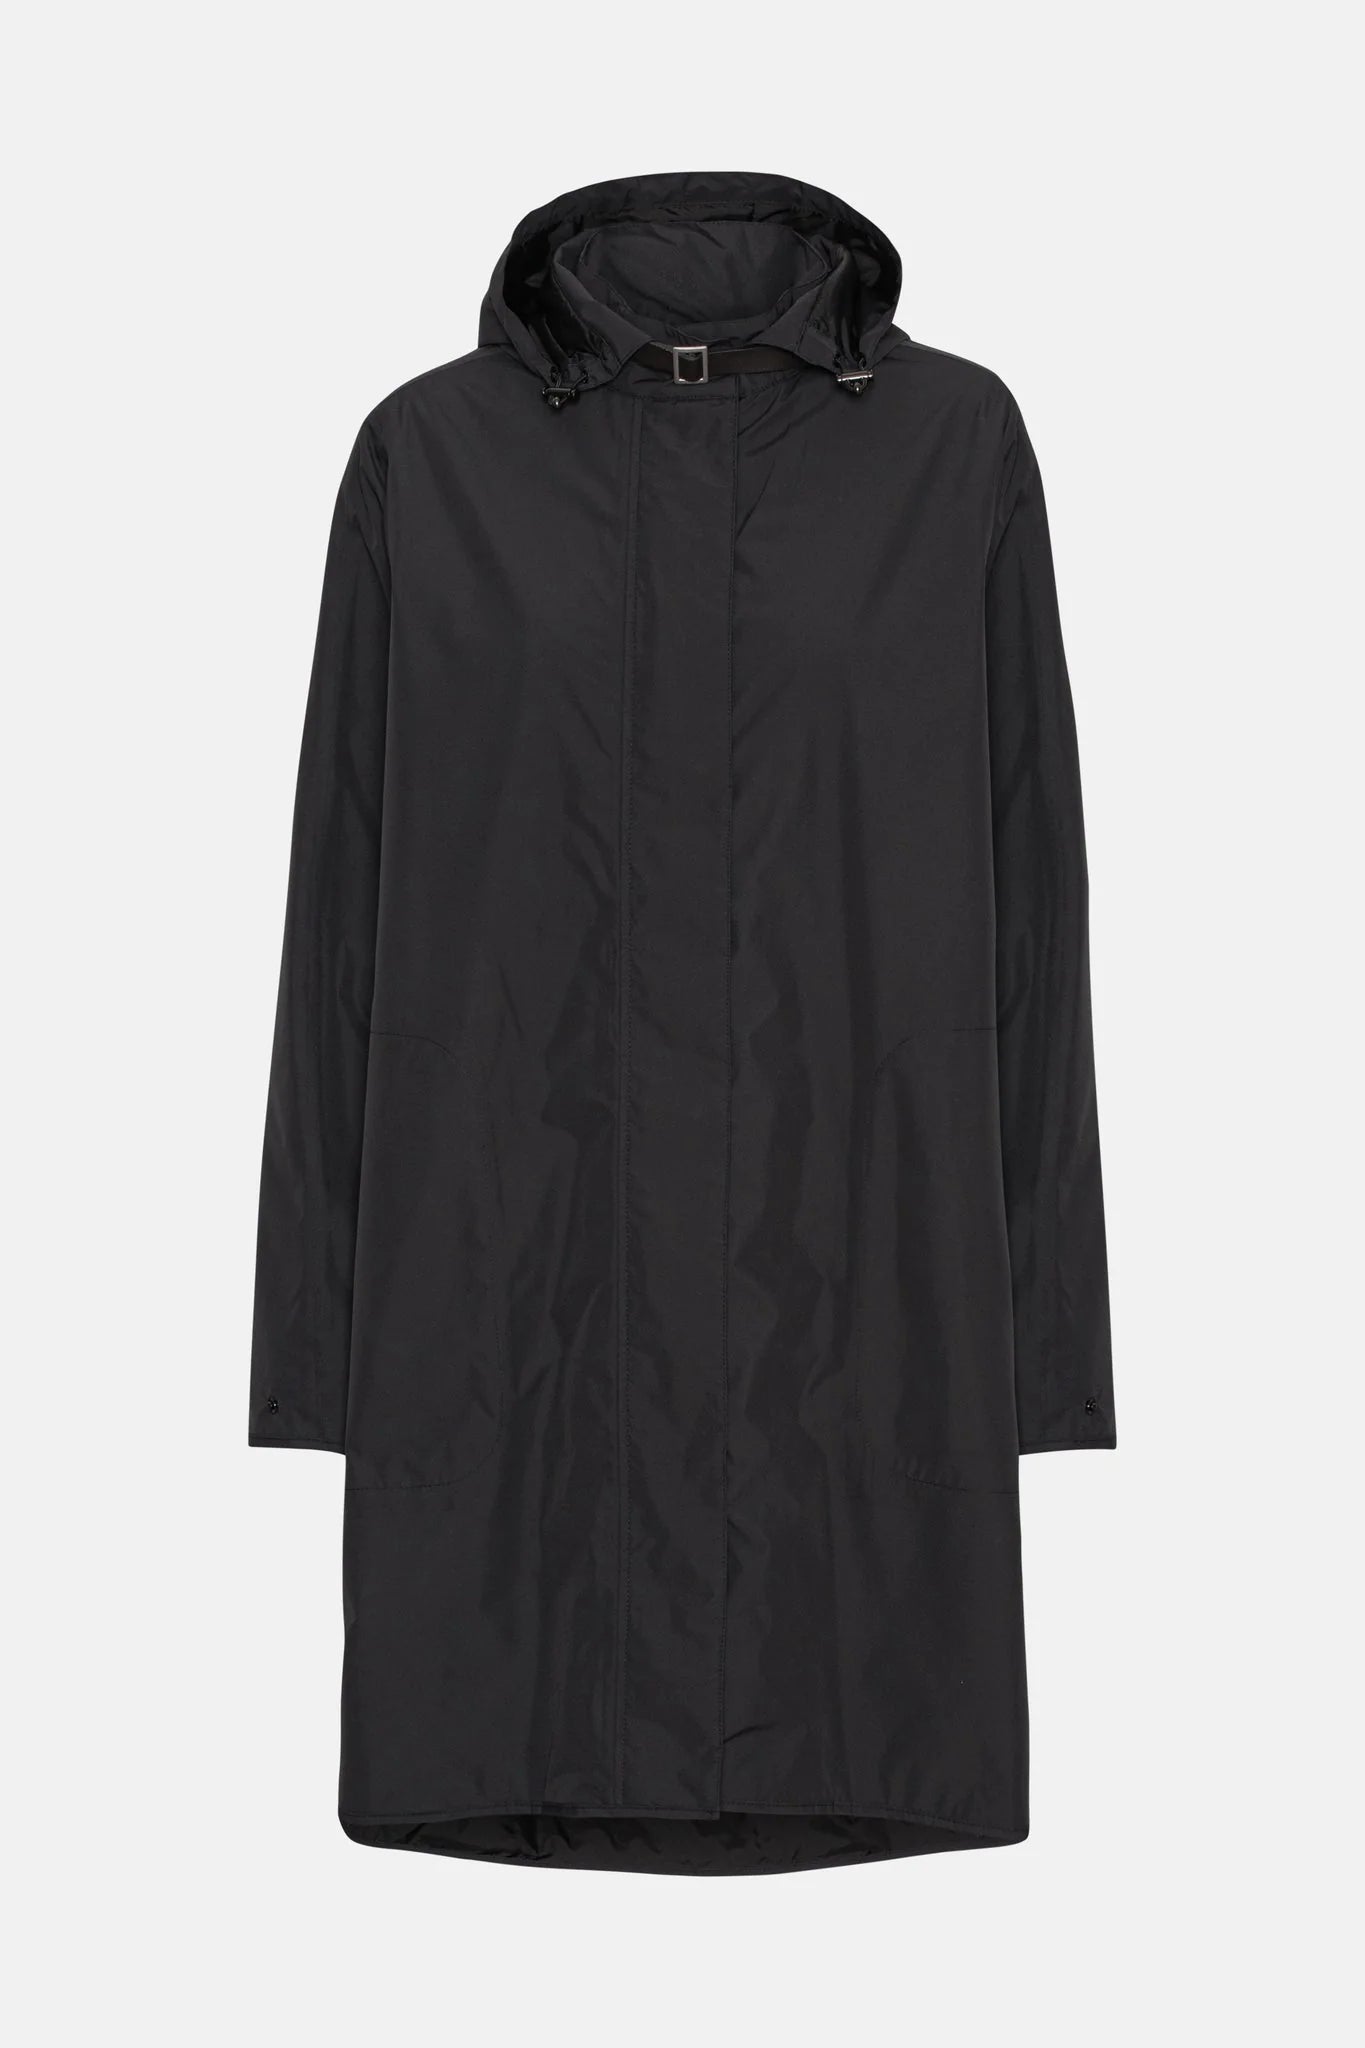 Ilse Jacobsen Rain 200 Black Coat